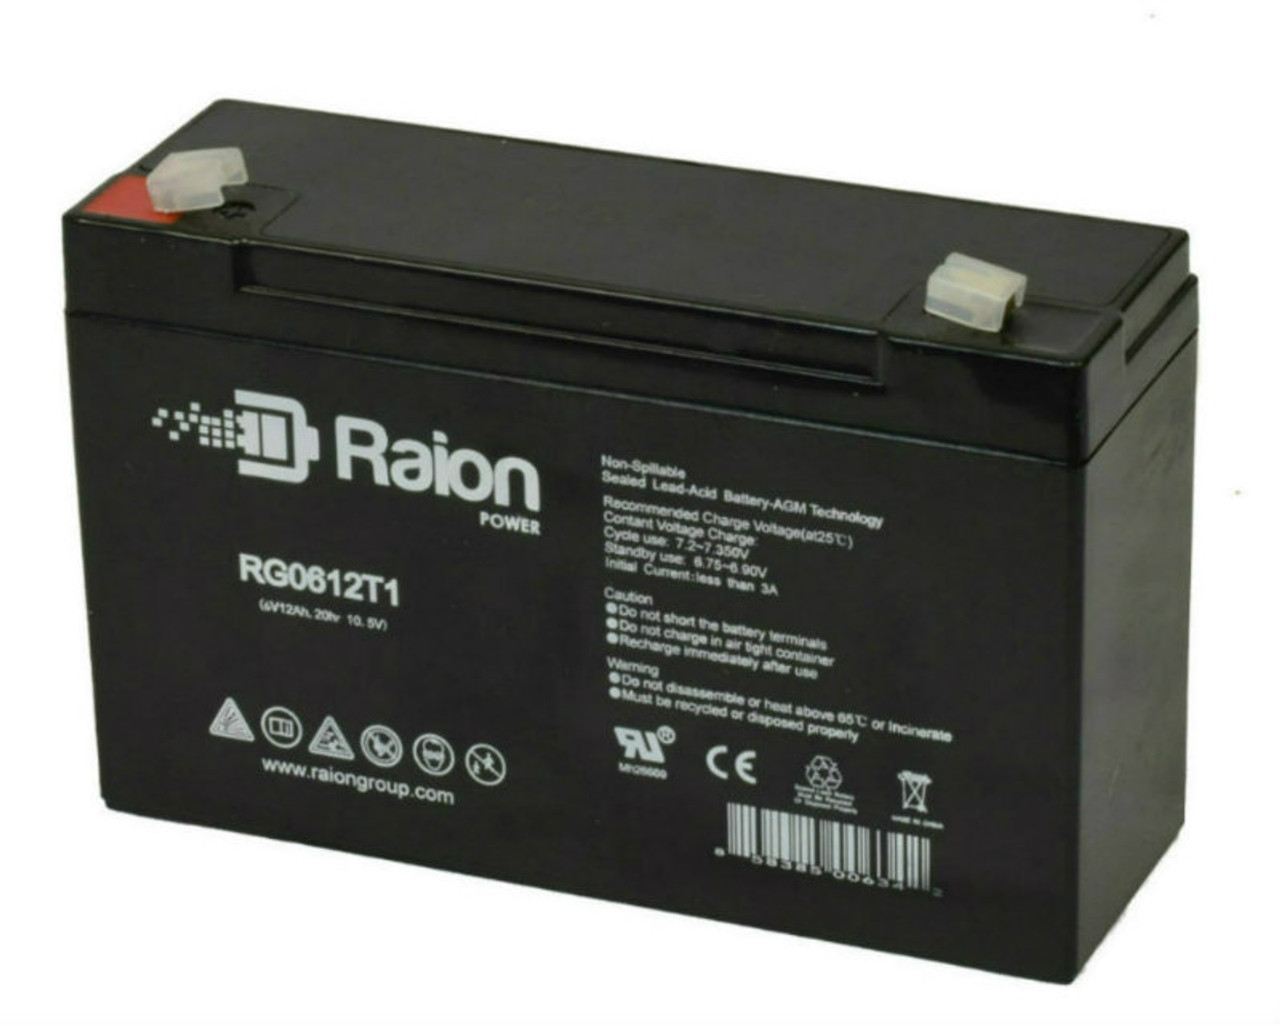 Raion Power RG06120T1 Replacement Emergency Light Battery for Sonnenschein NGA5060010HSOSA